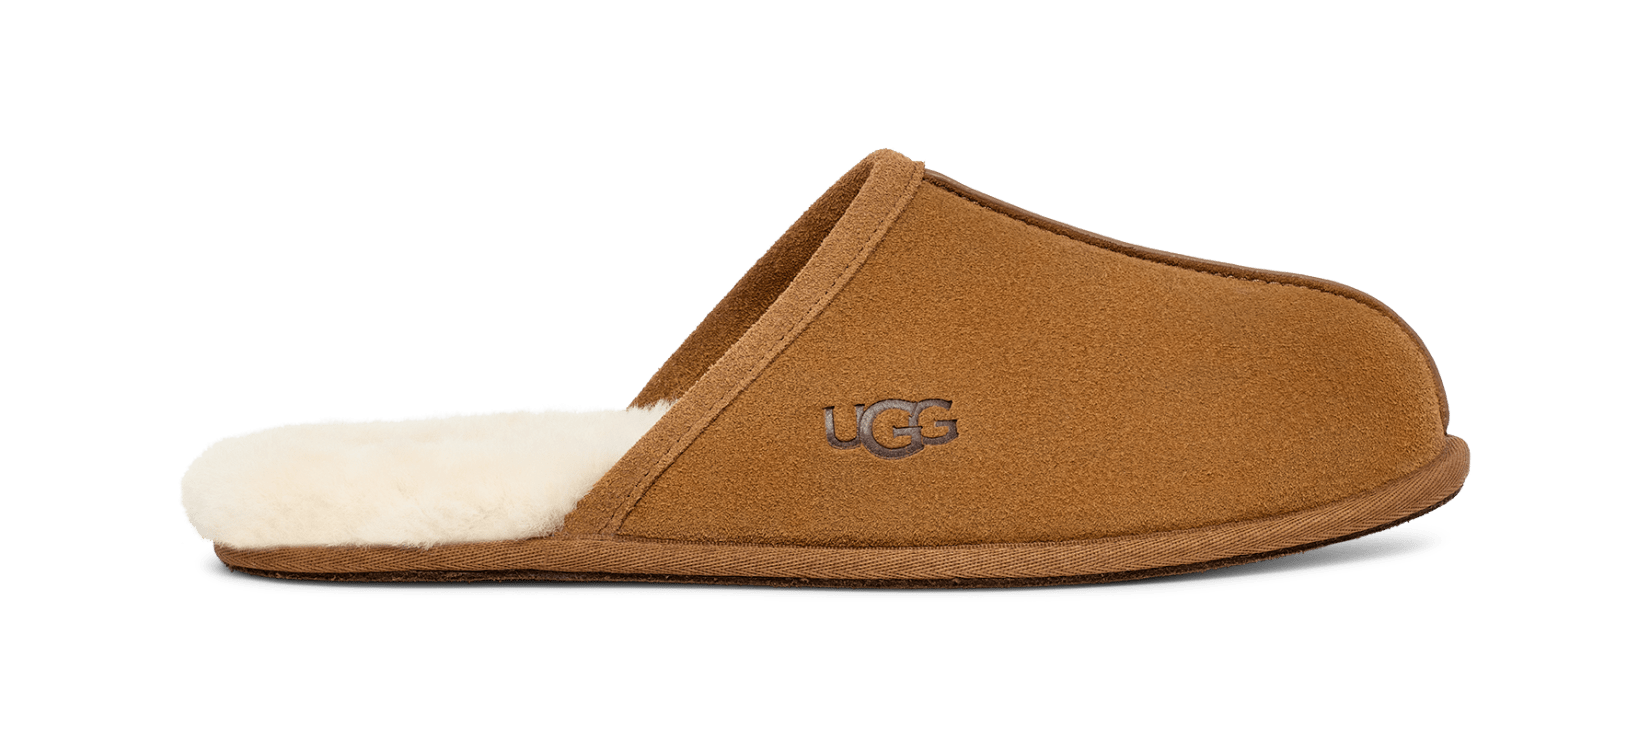 Ugg Scuffette II Slippers | Cruise Fashion